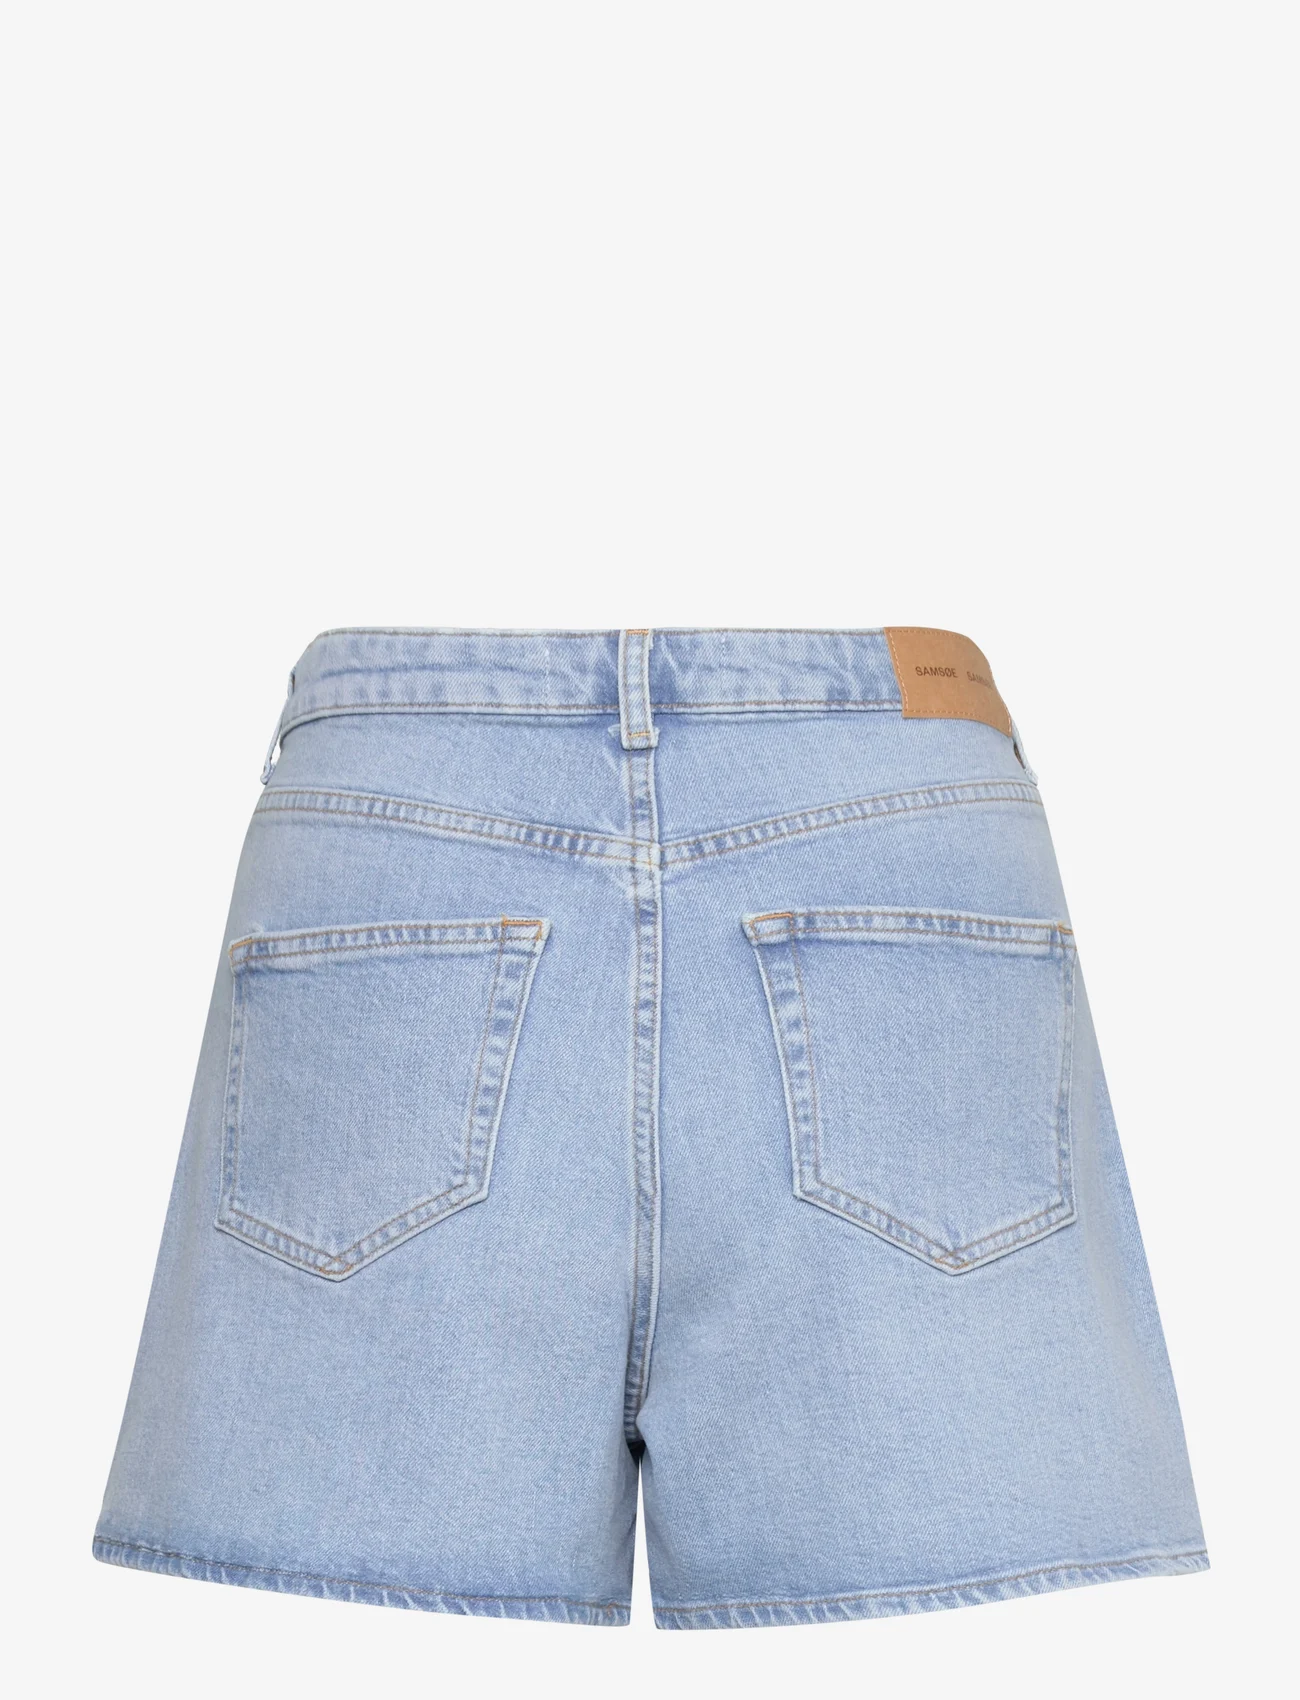 Samsøe Samsøe - Adelina shorts 14377 - jeansshorts - light comfort - 1